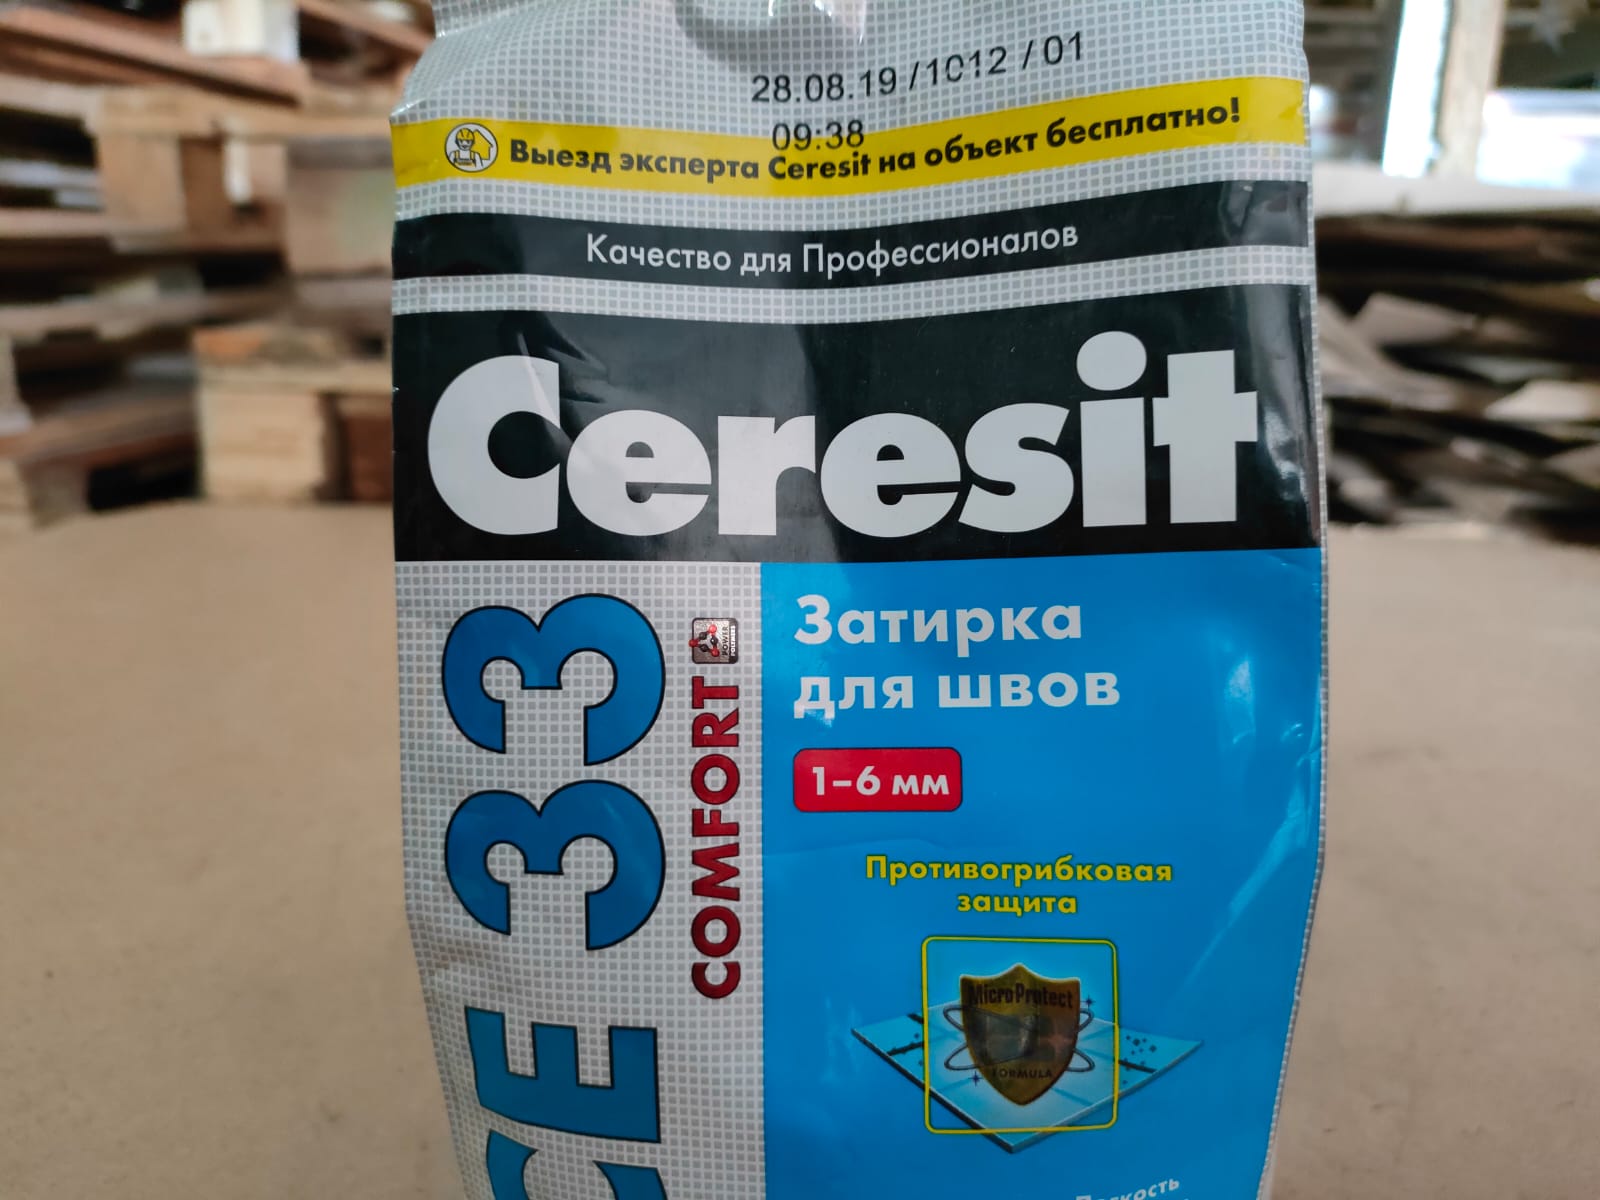 Затирка для узких швов Ceresit CE 33 Comfort, ширина шва 2-6 мм, 2 кг, цвет мята ДИСКОНТ								